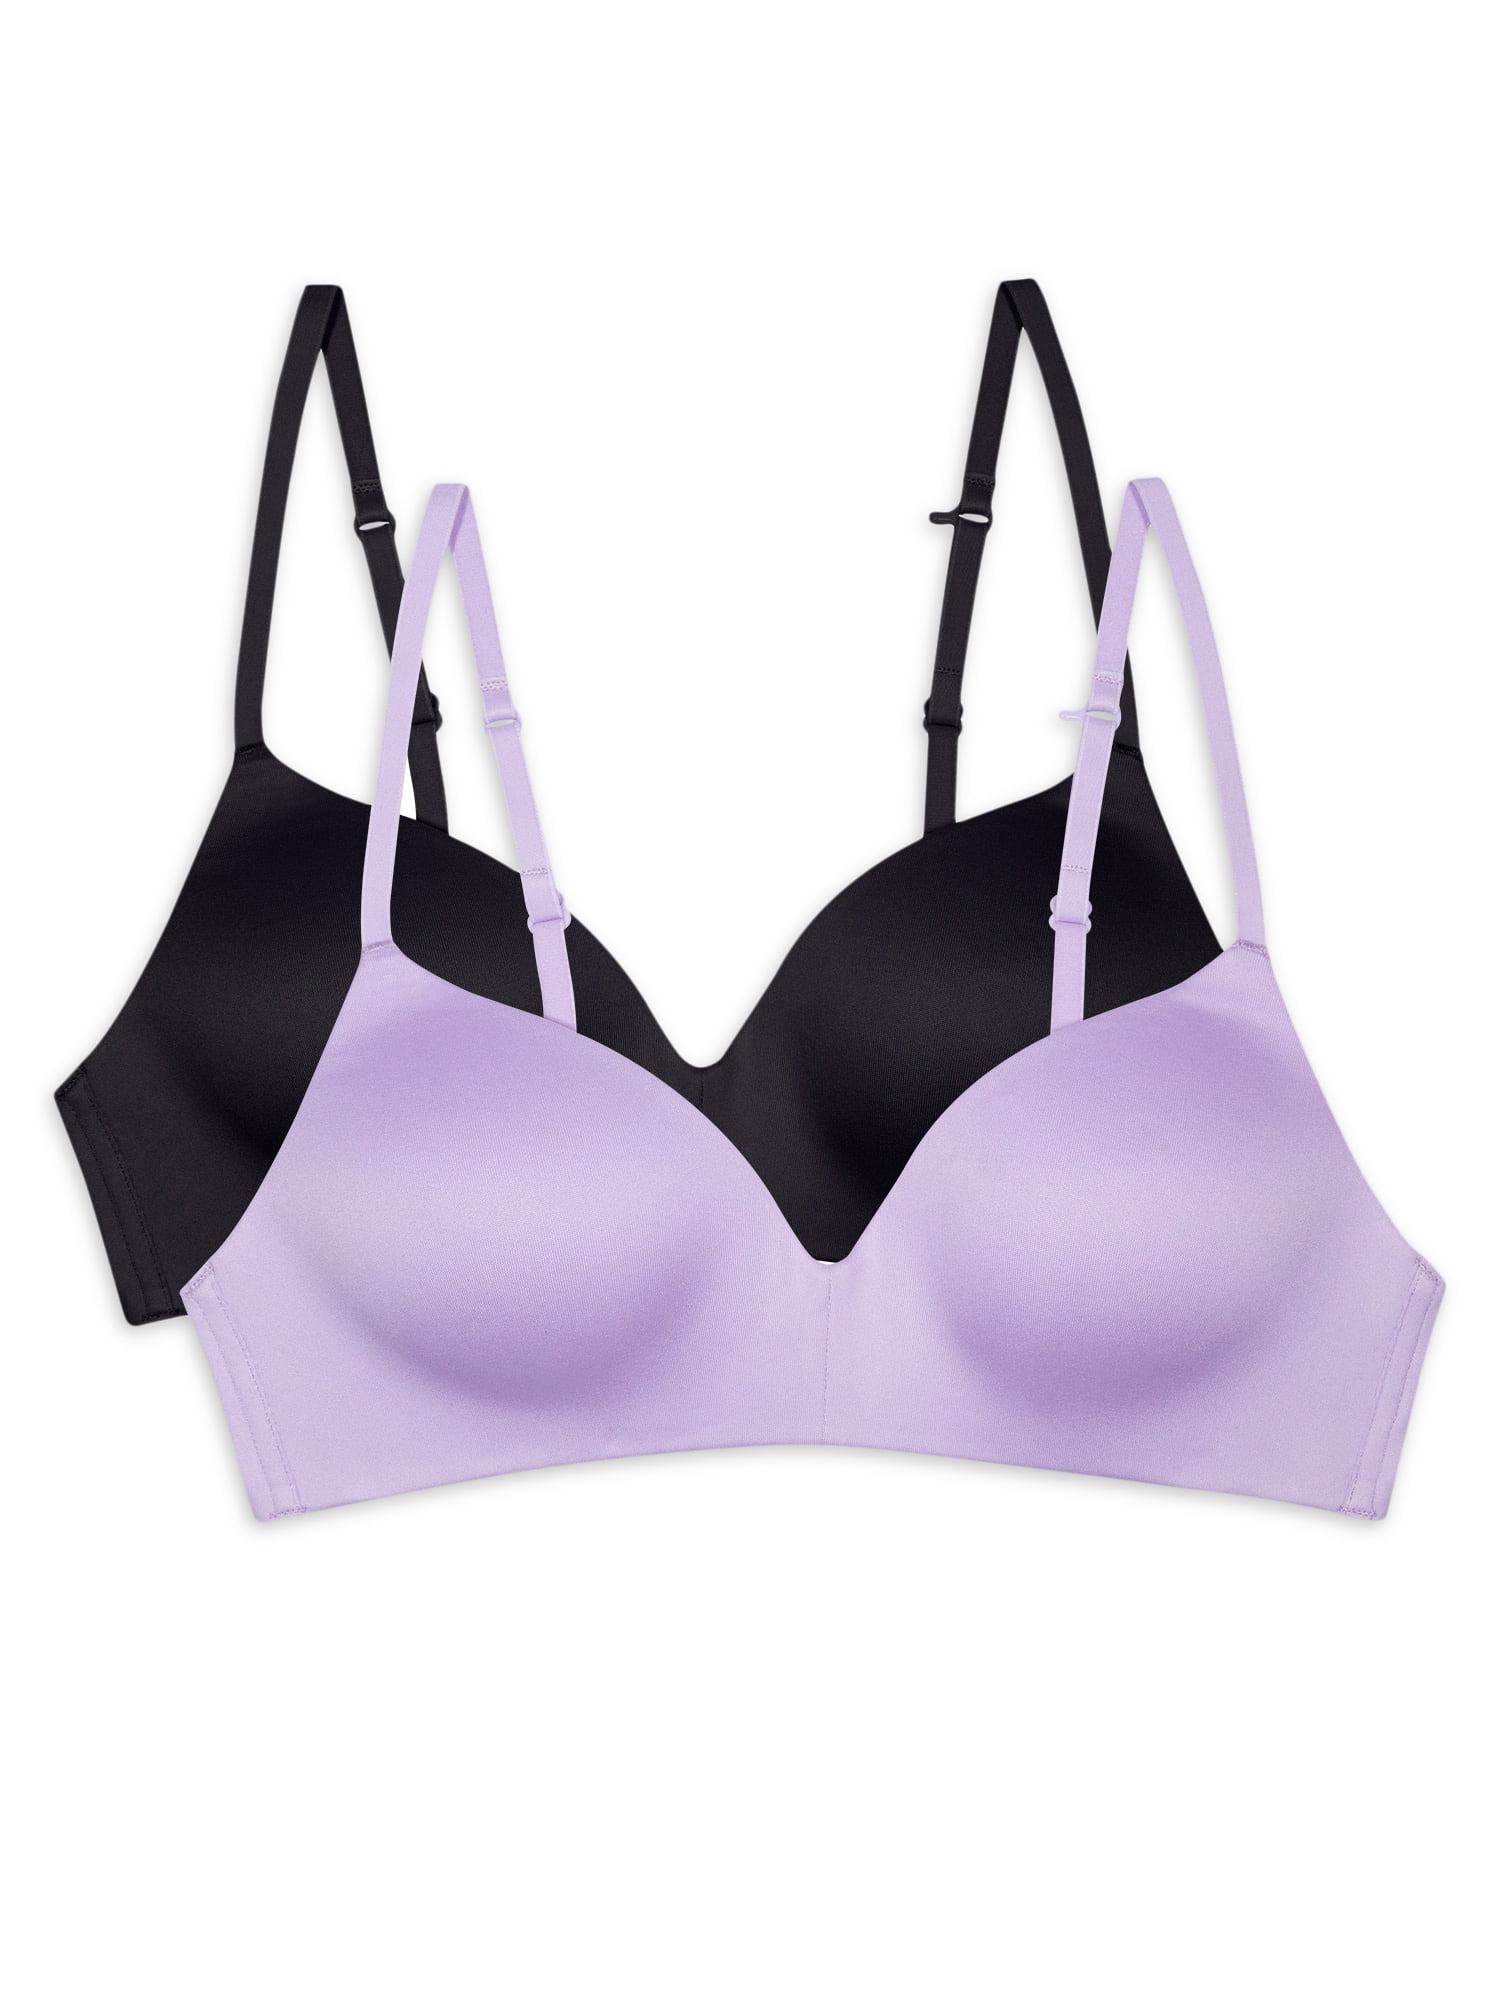 women's so intimates purple dotted bra size 34A t-shirt bra MSRP $24  brand new 